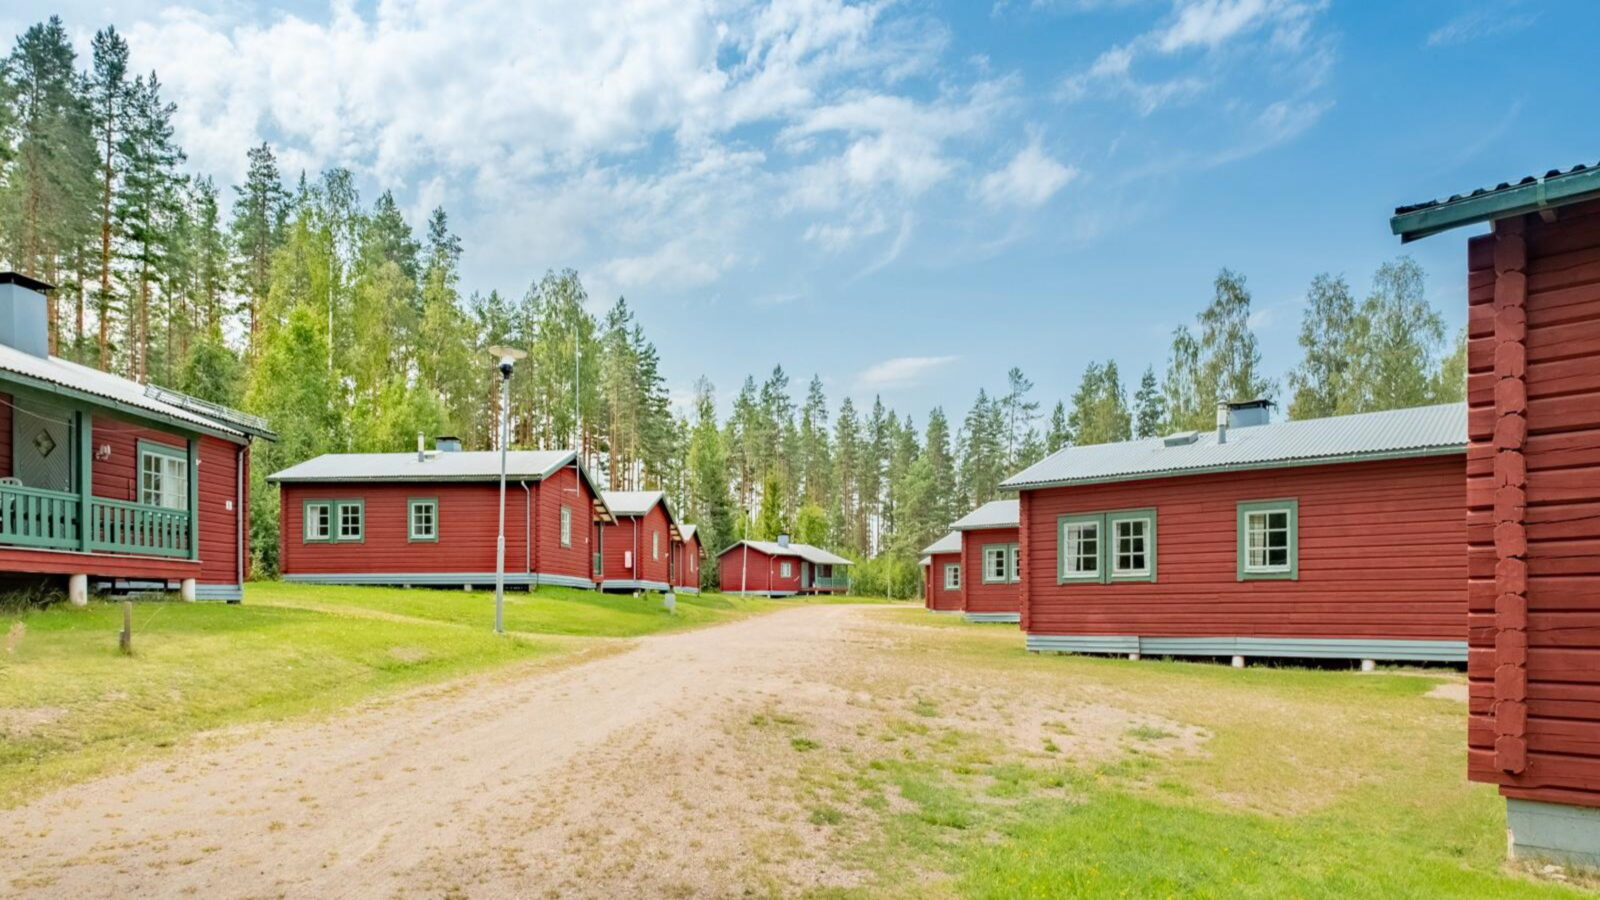 Ekesberget holiday village in Värmland